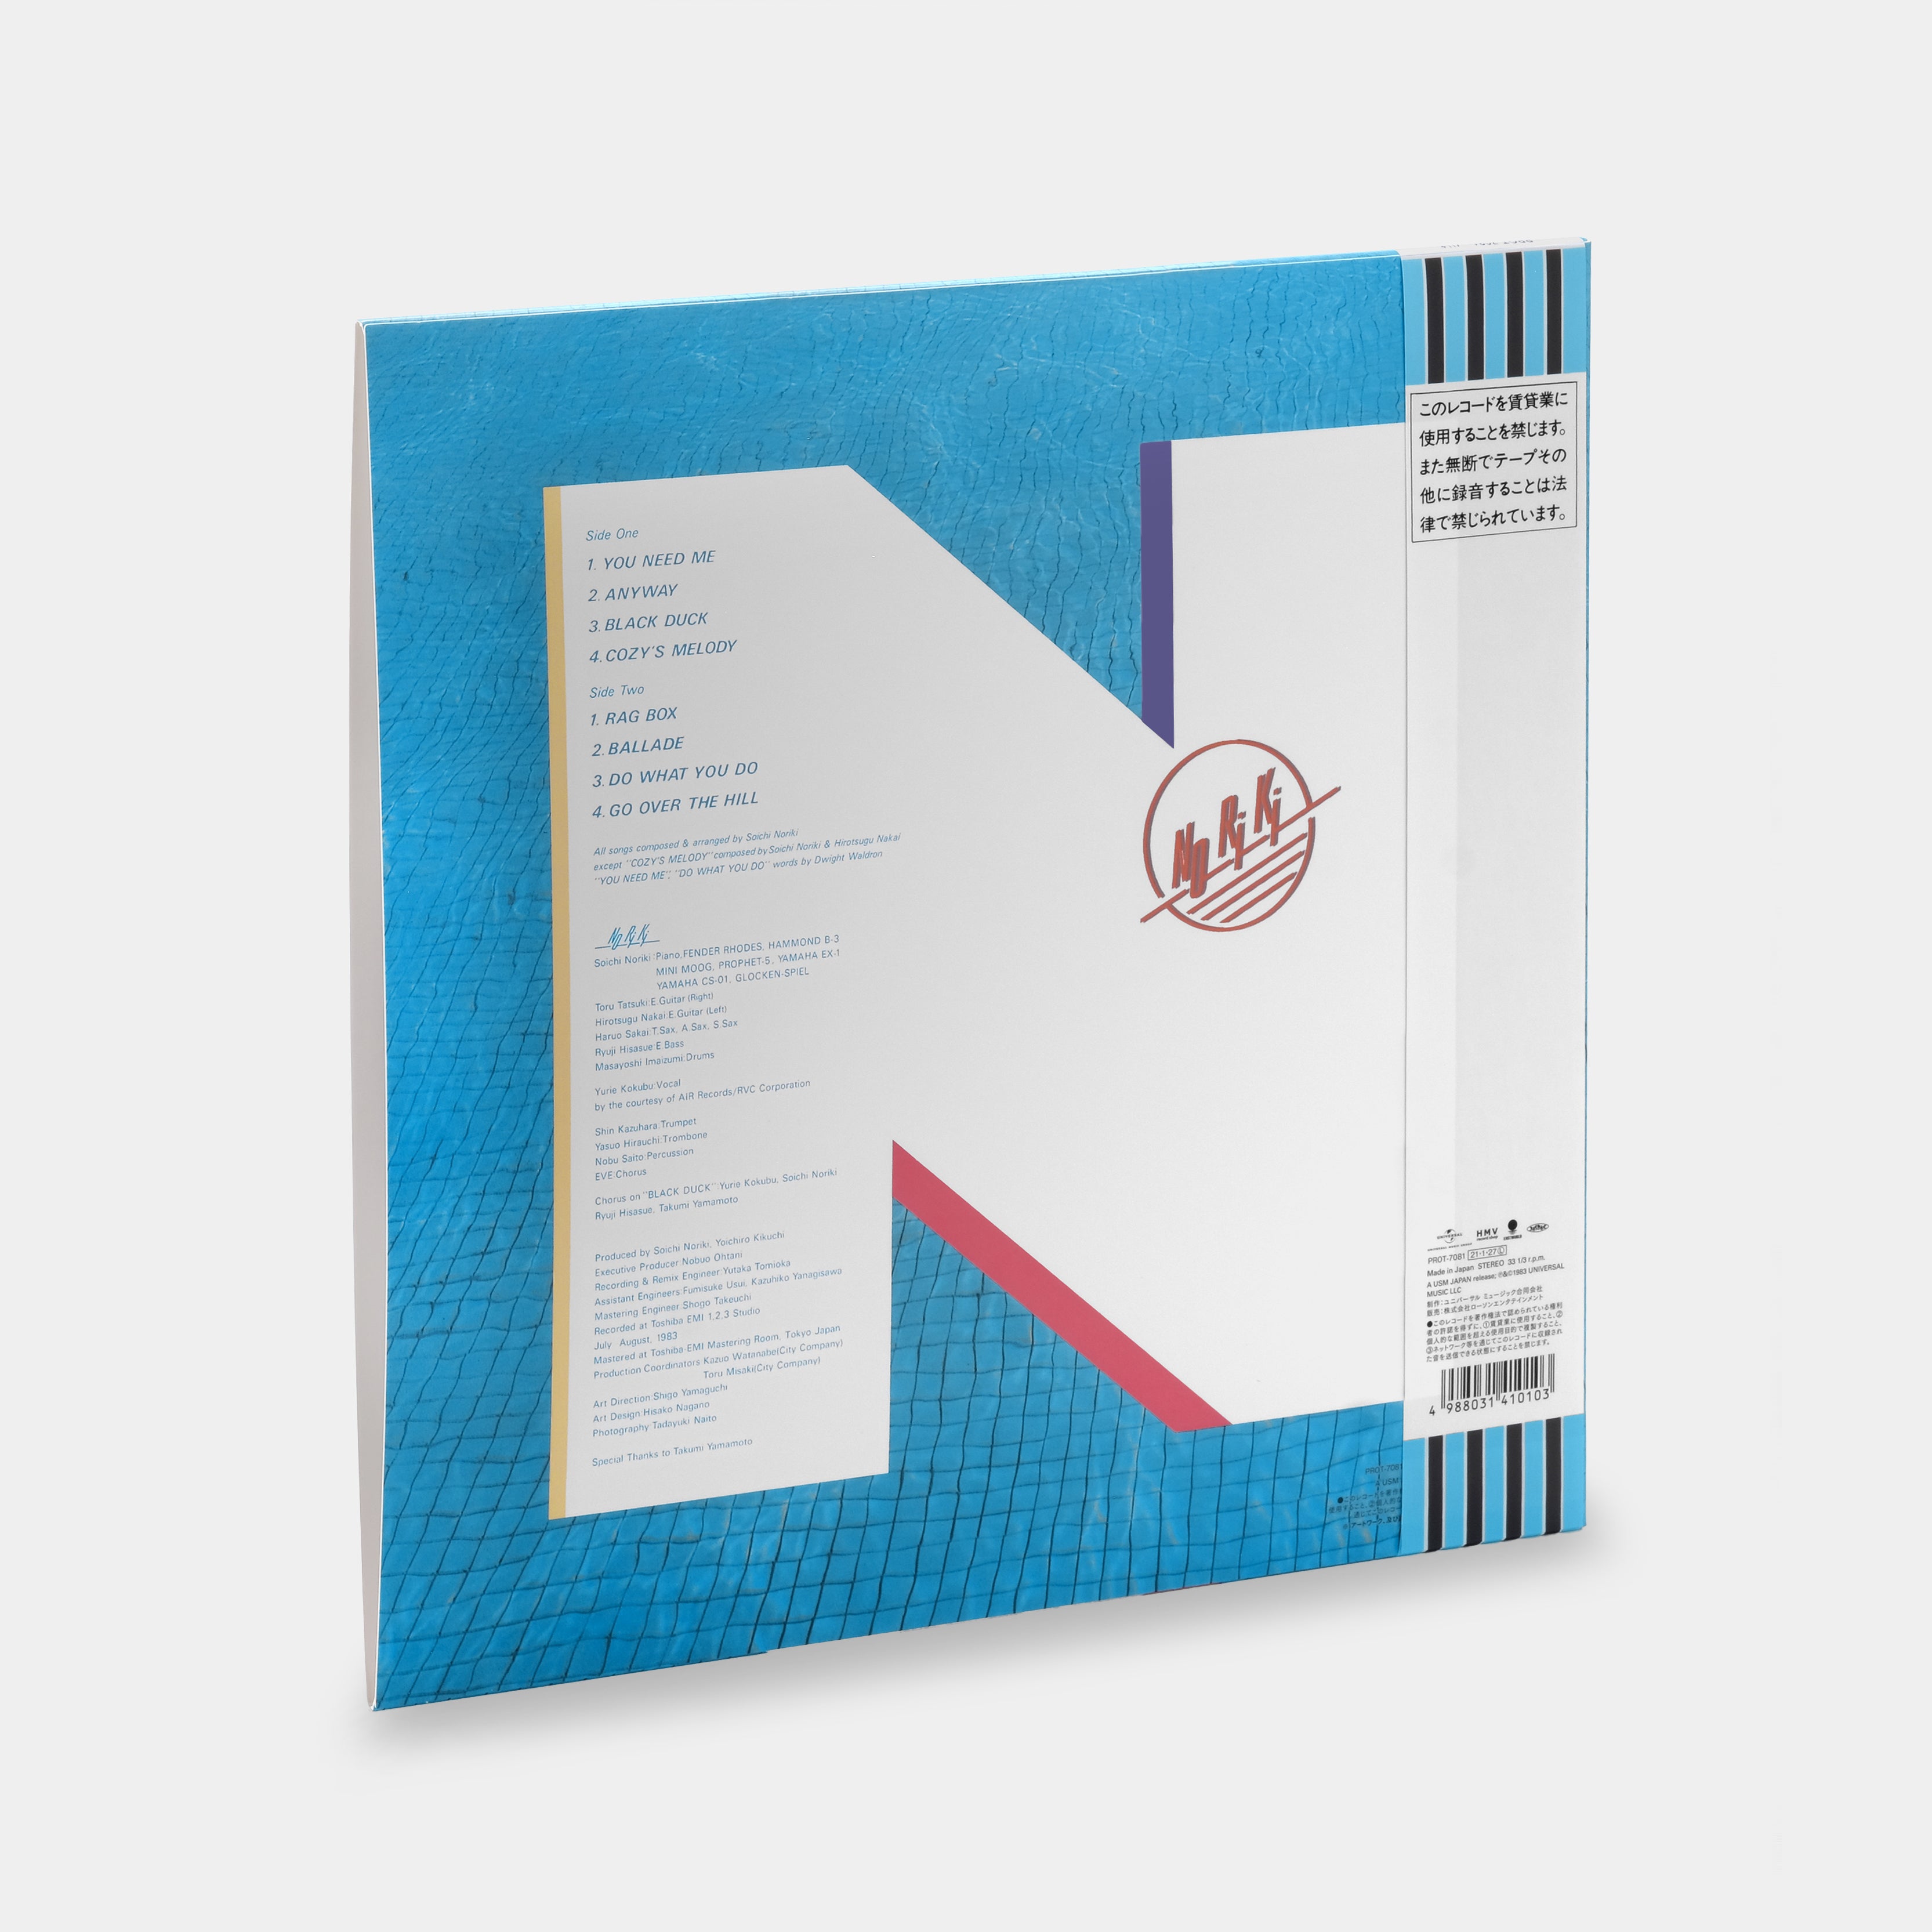 Noriki - Noriki LP Vinyl Record